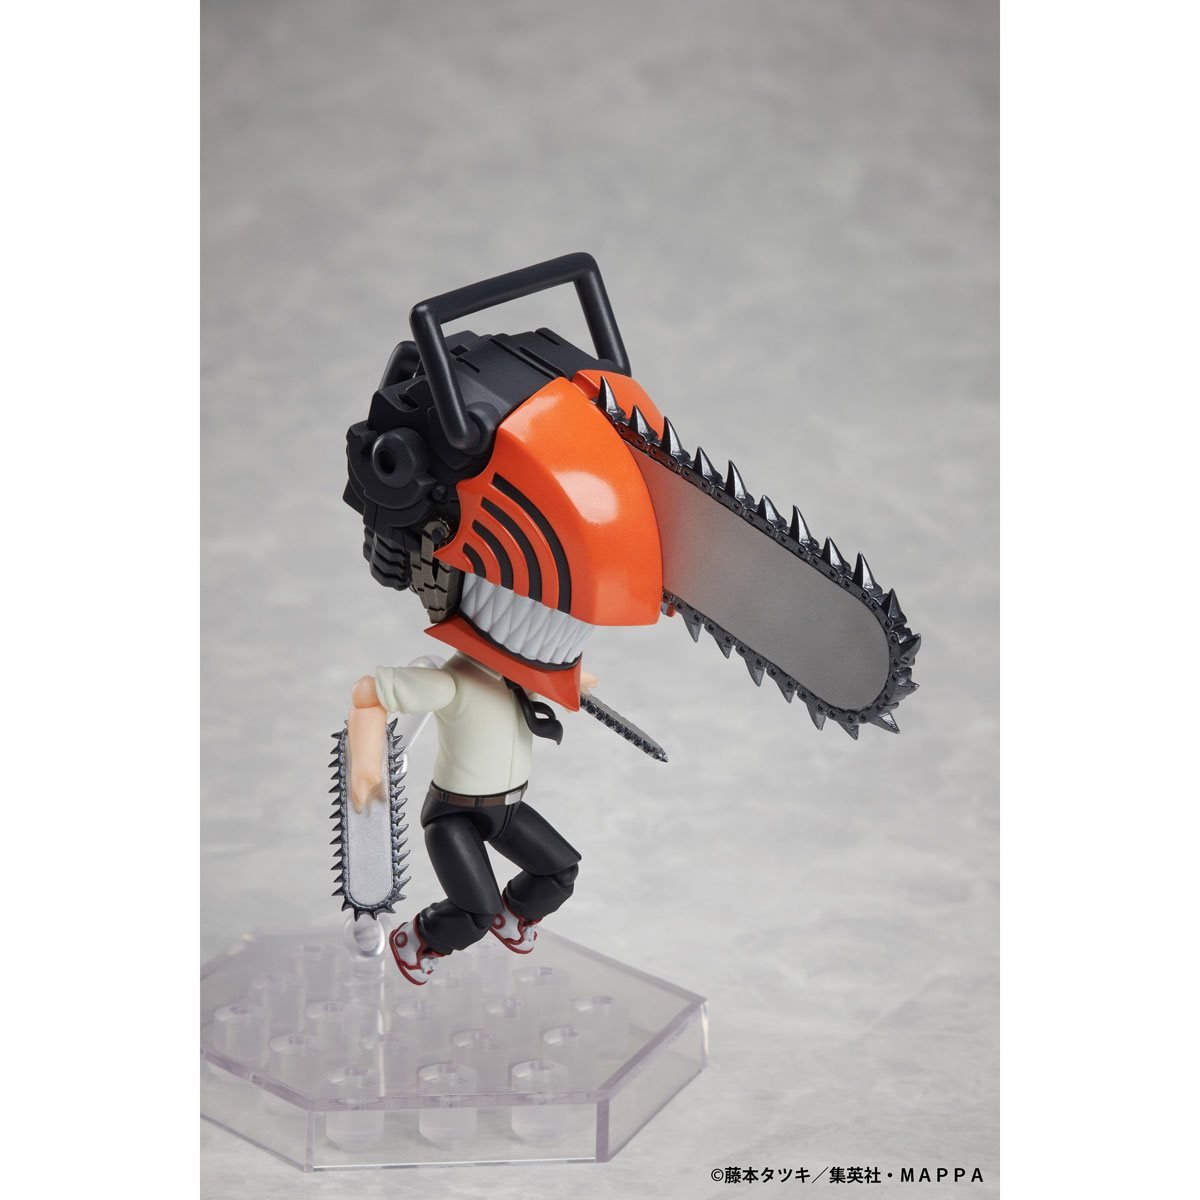 ELCOCO Chainsaw Man DFORM+ Deforme Action Figure